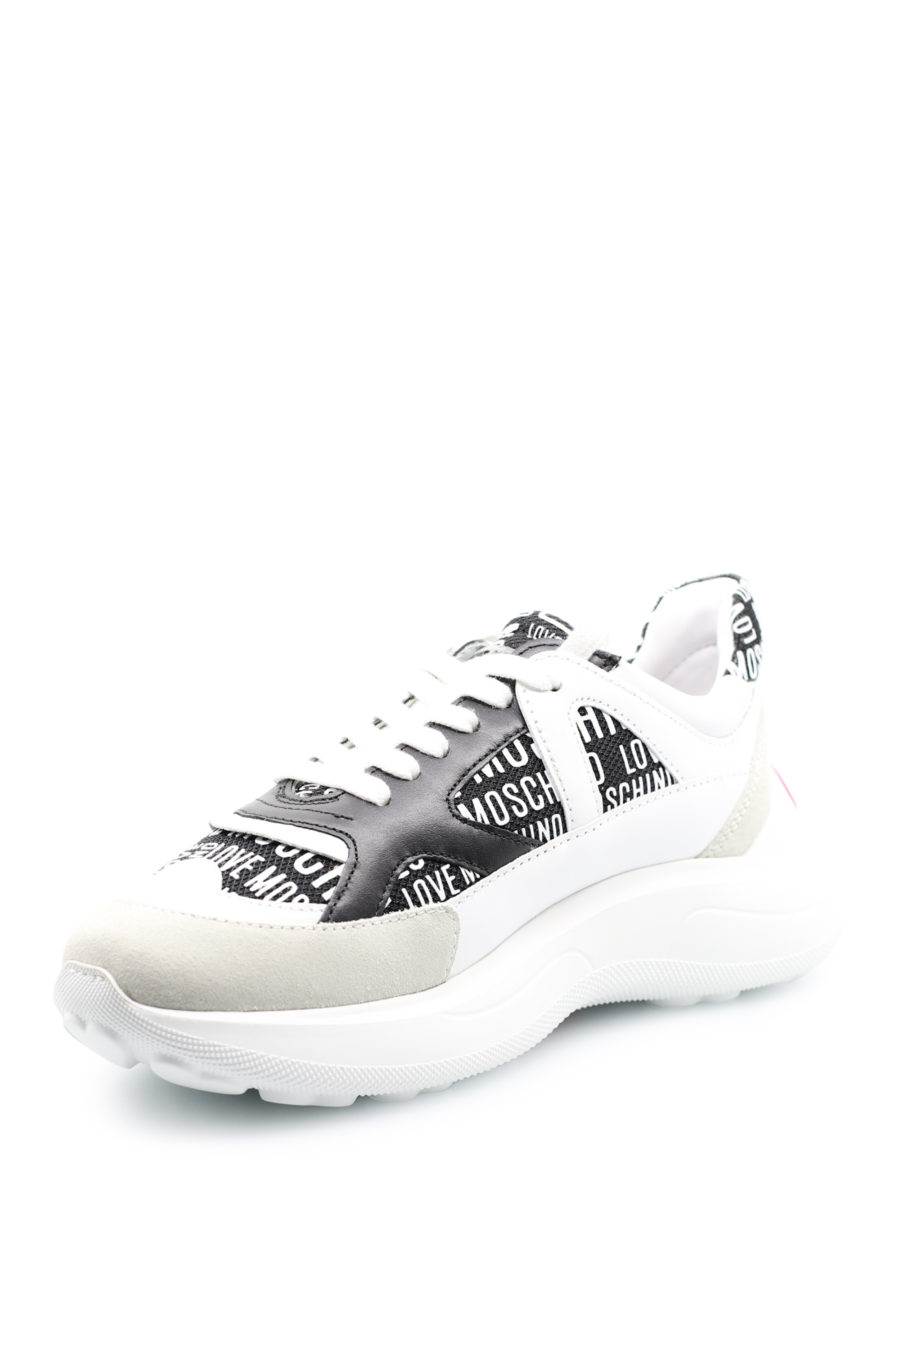 Zapatillas blancas con logotipo estampado "all over" - c2ad1de1010fbd14be6bde6039ce15f3a6a55429